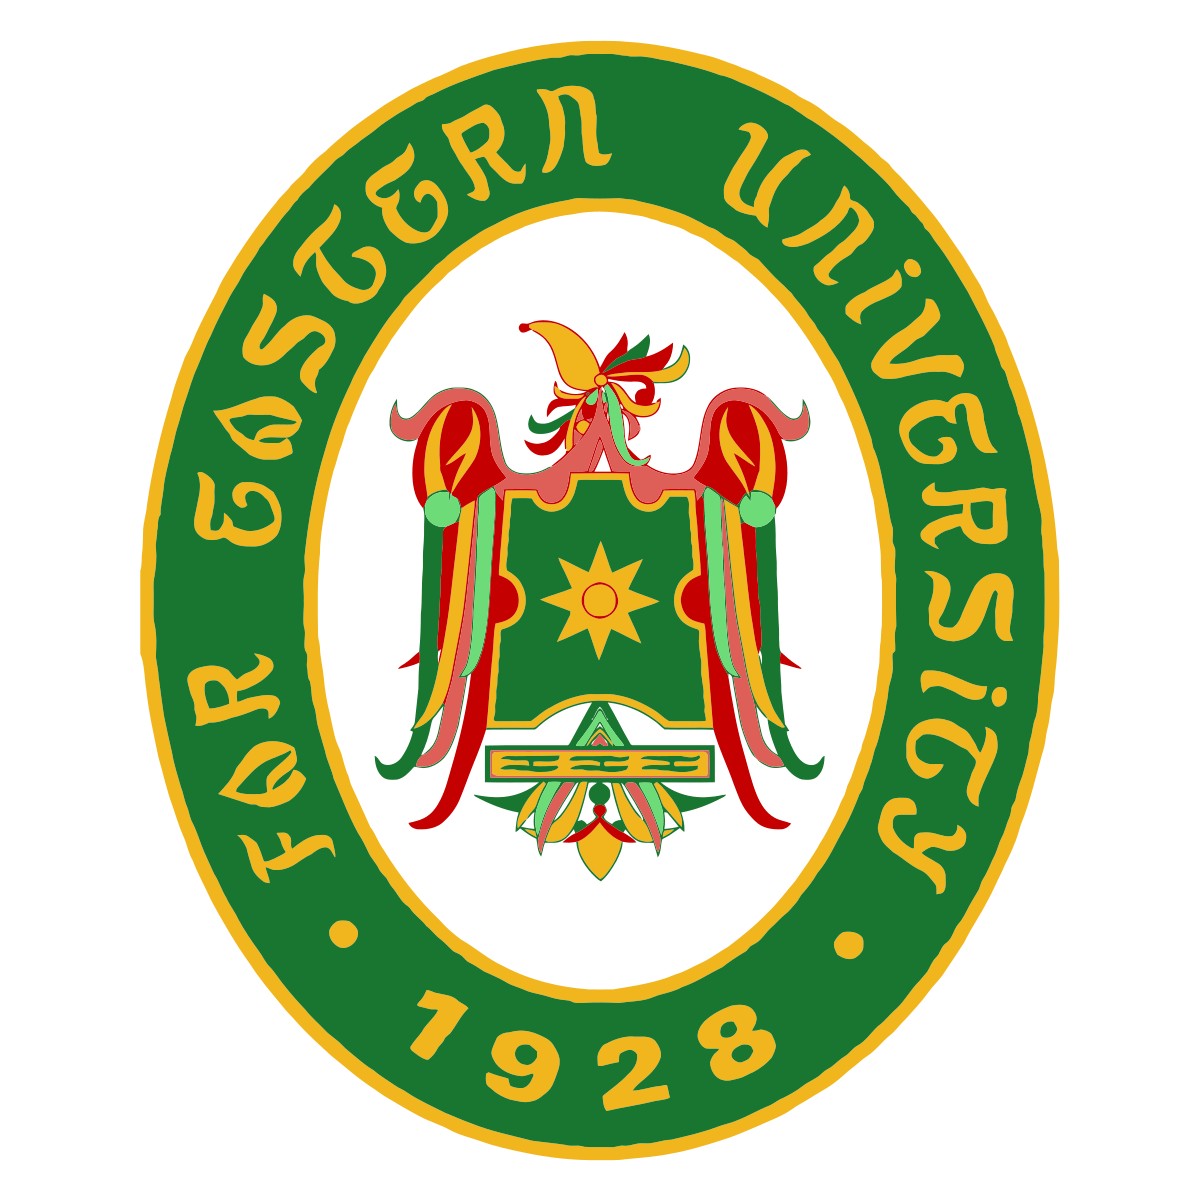 Far eastern. Far Eastern University. Far Eastern University feu. University logo. Oriental University logo.